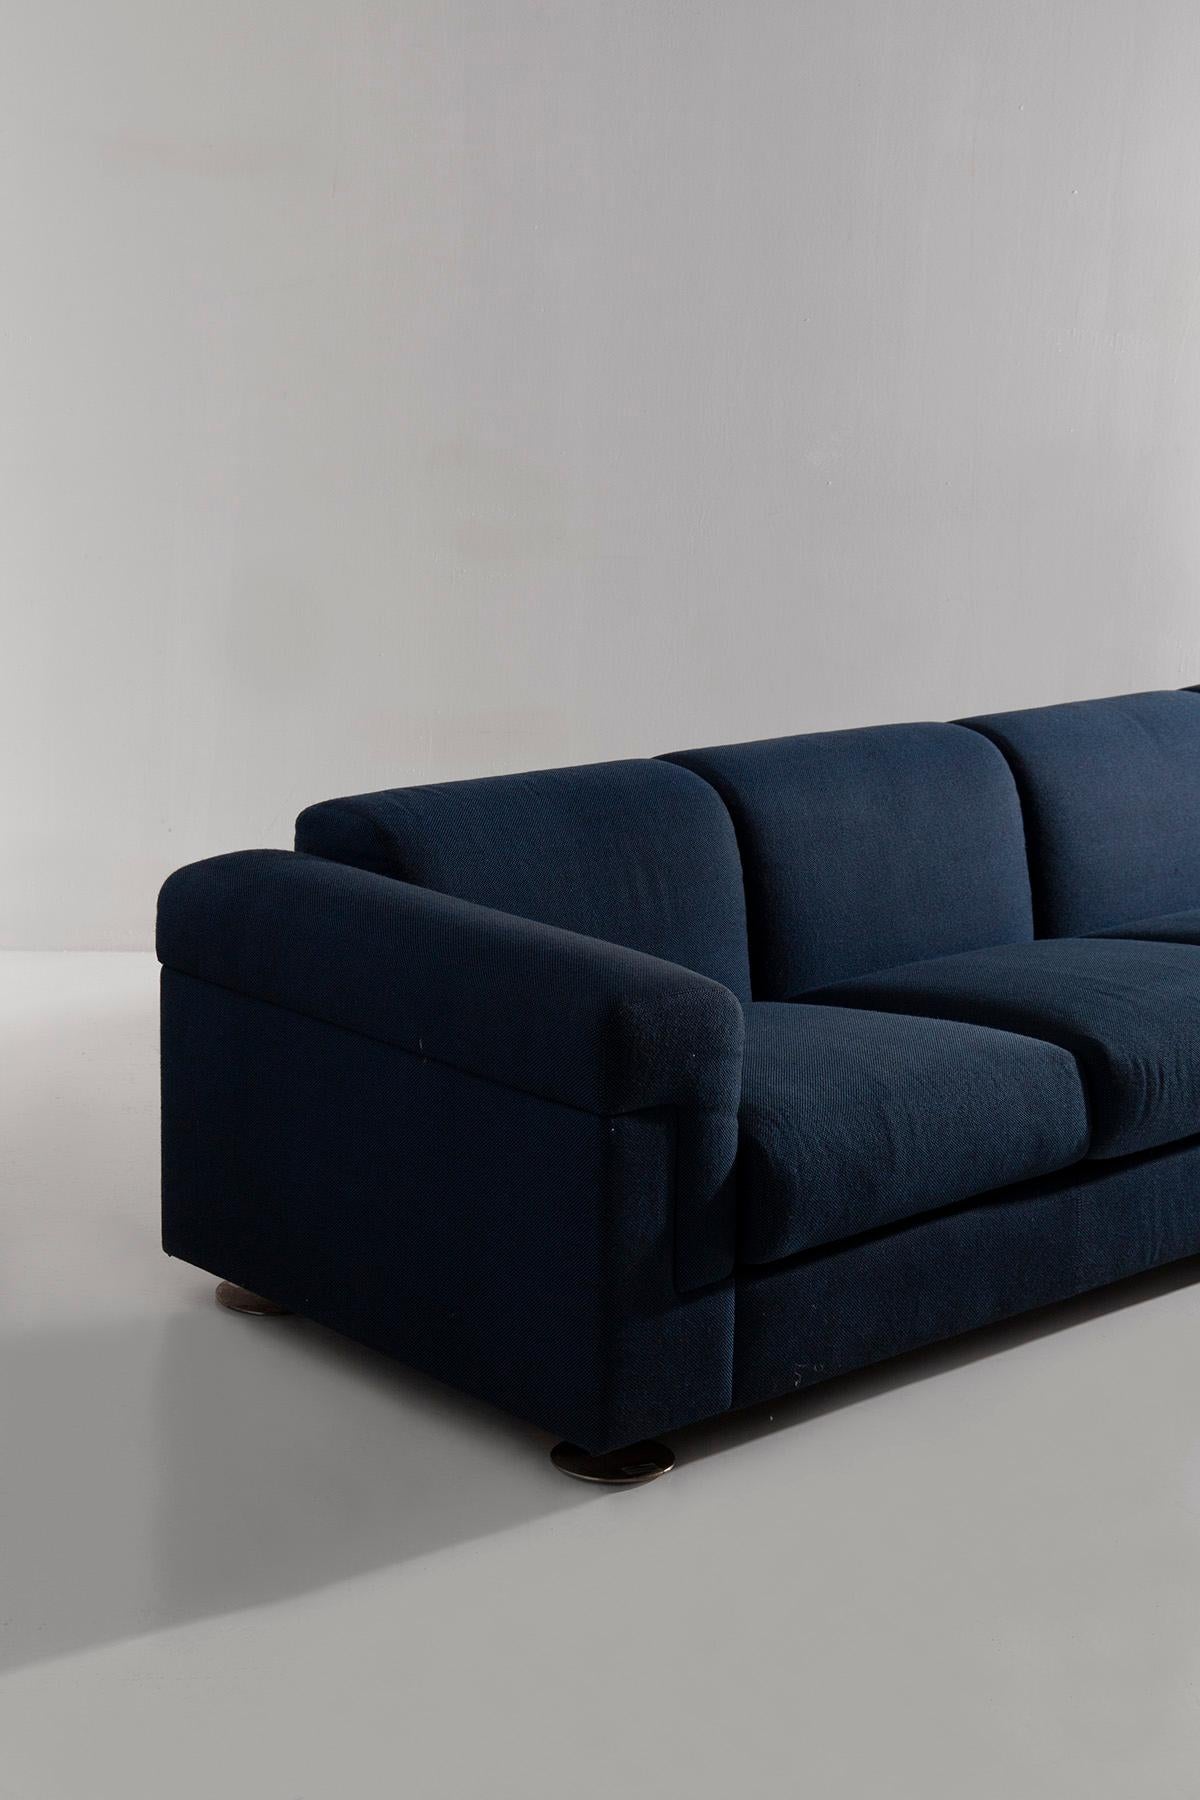 Mid-20th Century Sofa Mod. D120 by V. Borsani and A. Bonetti prod. Tecno For Sale